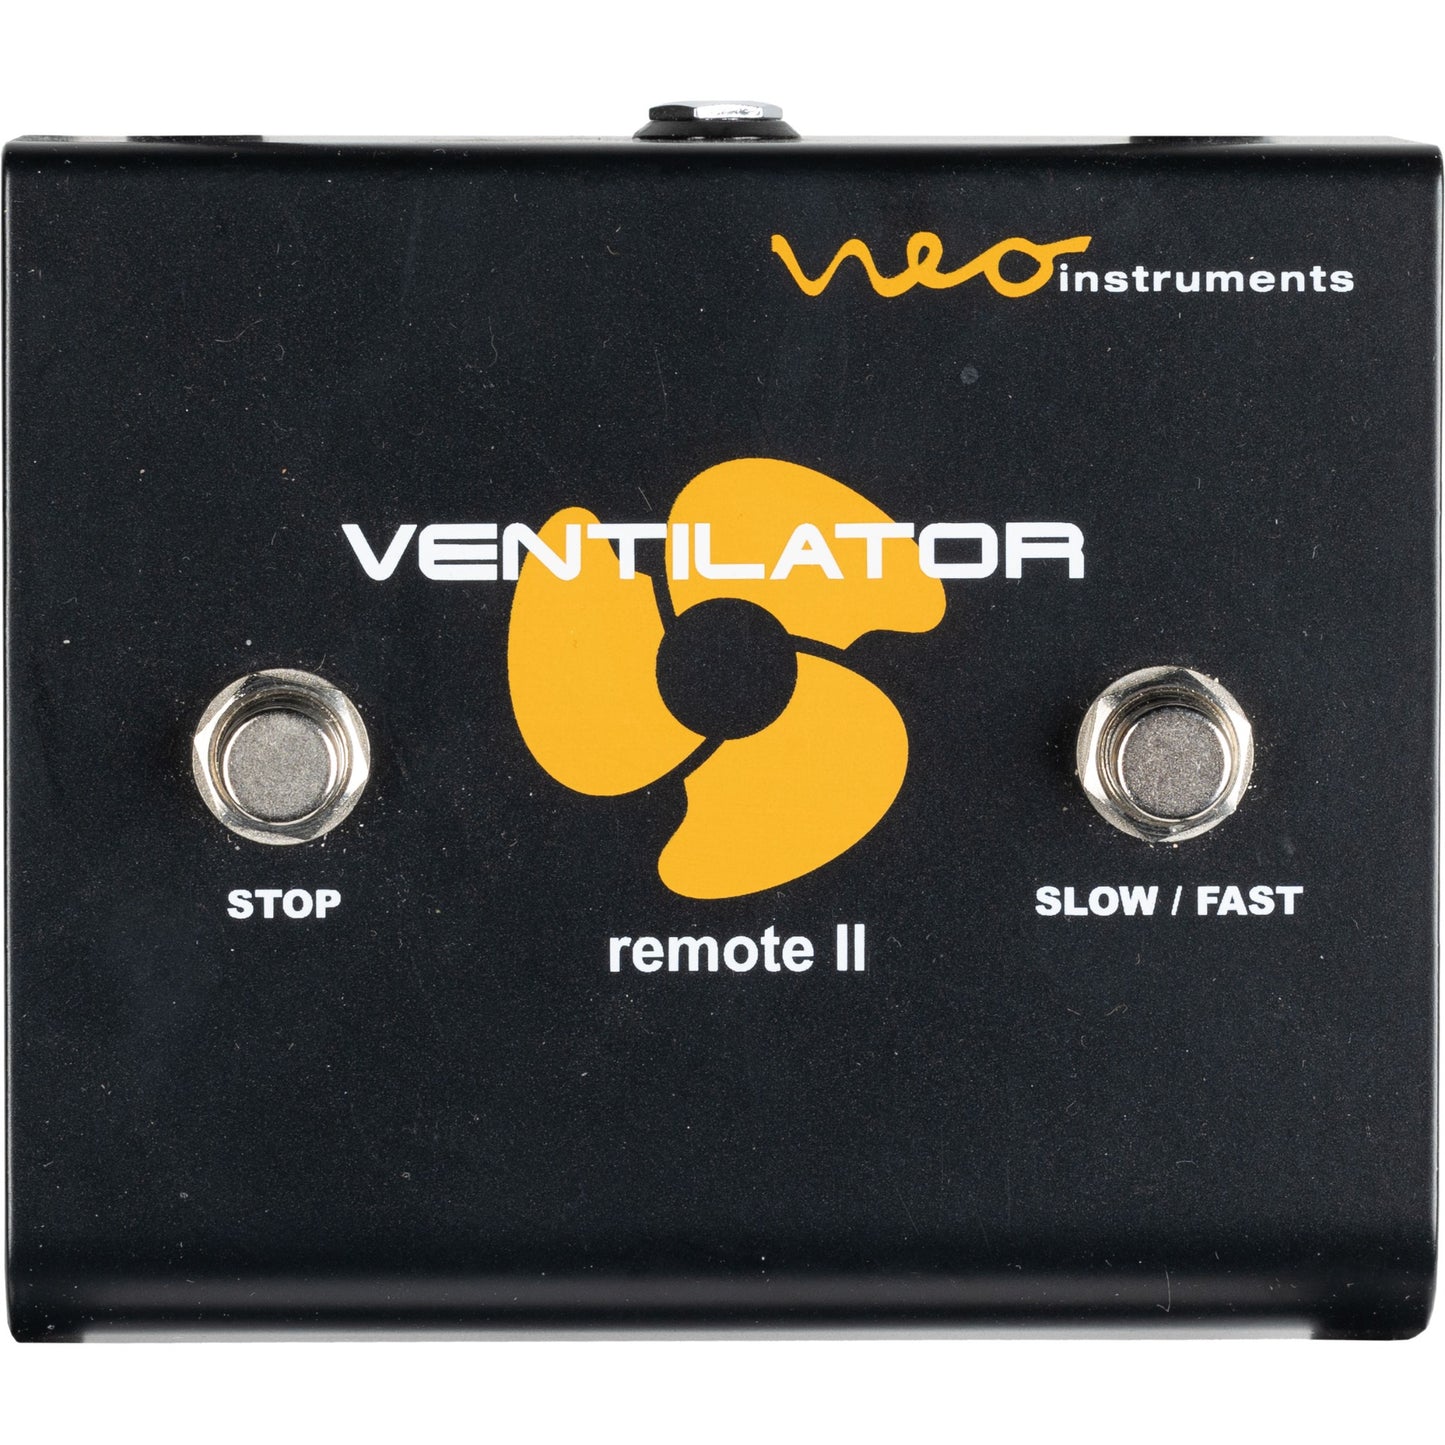 Neo Instruments Ventilator Remote II